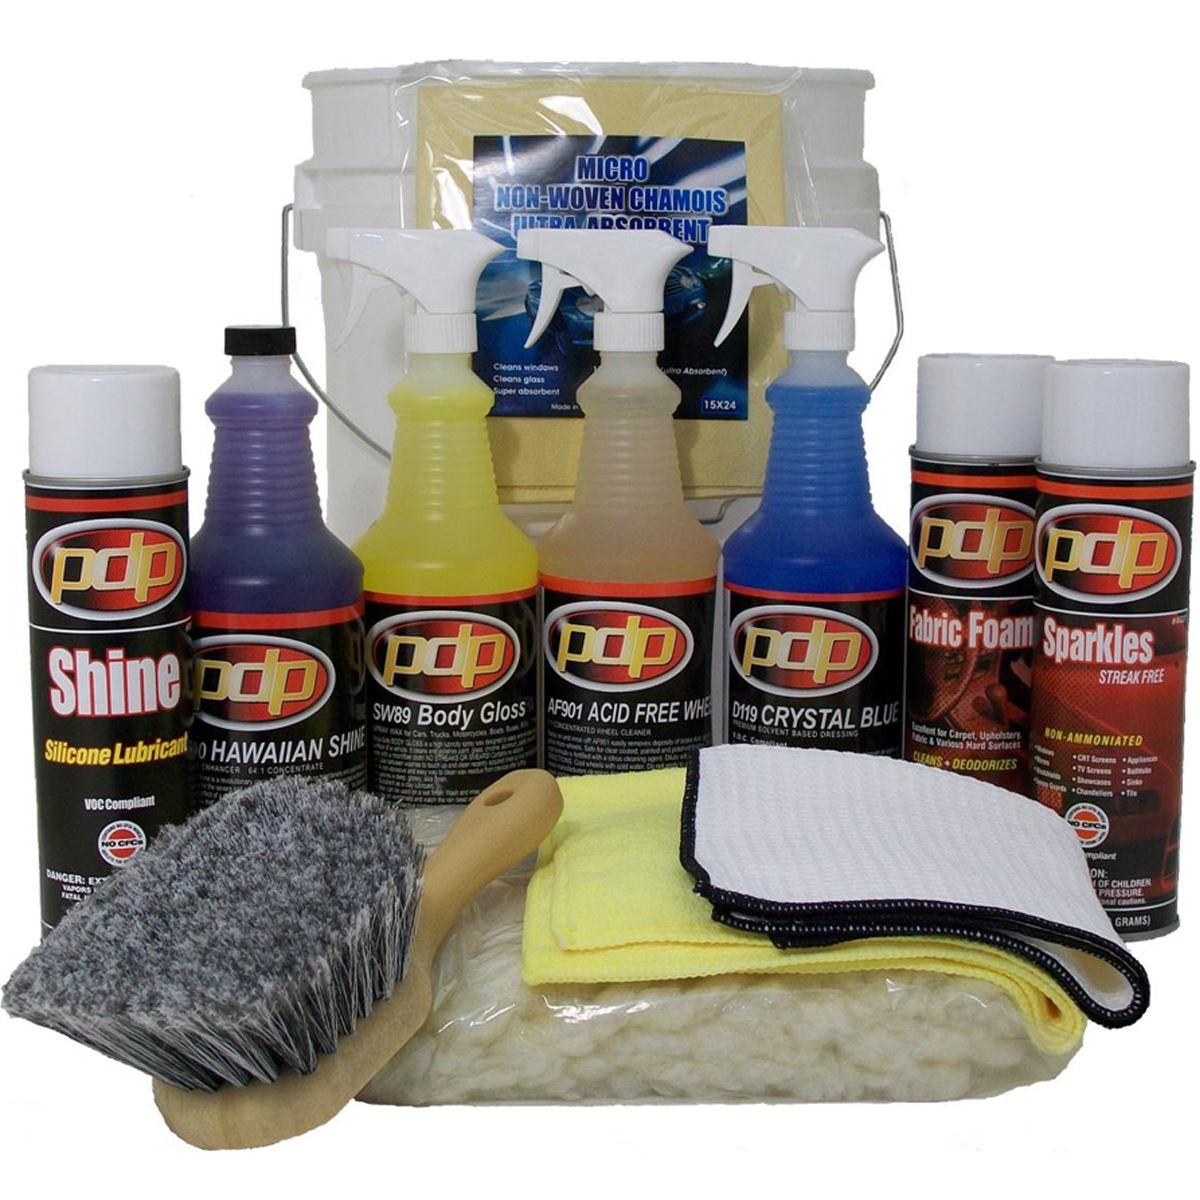 Car Cleaning Gel, Car Detailing Kit, Car Cleaning Supplies